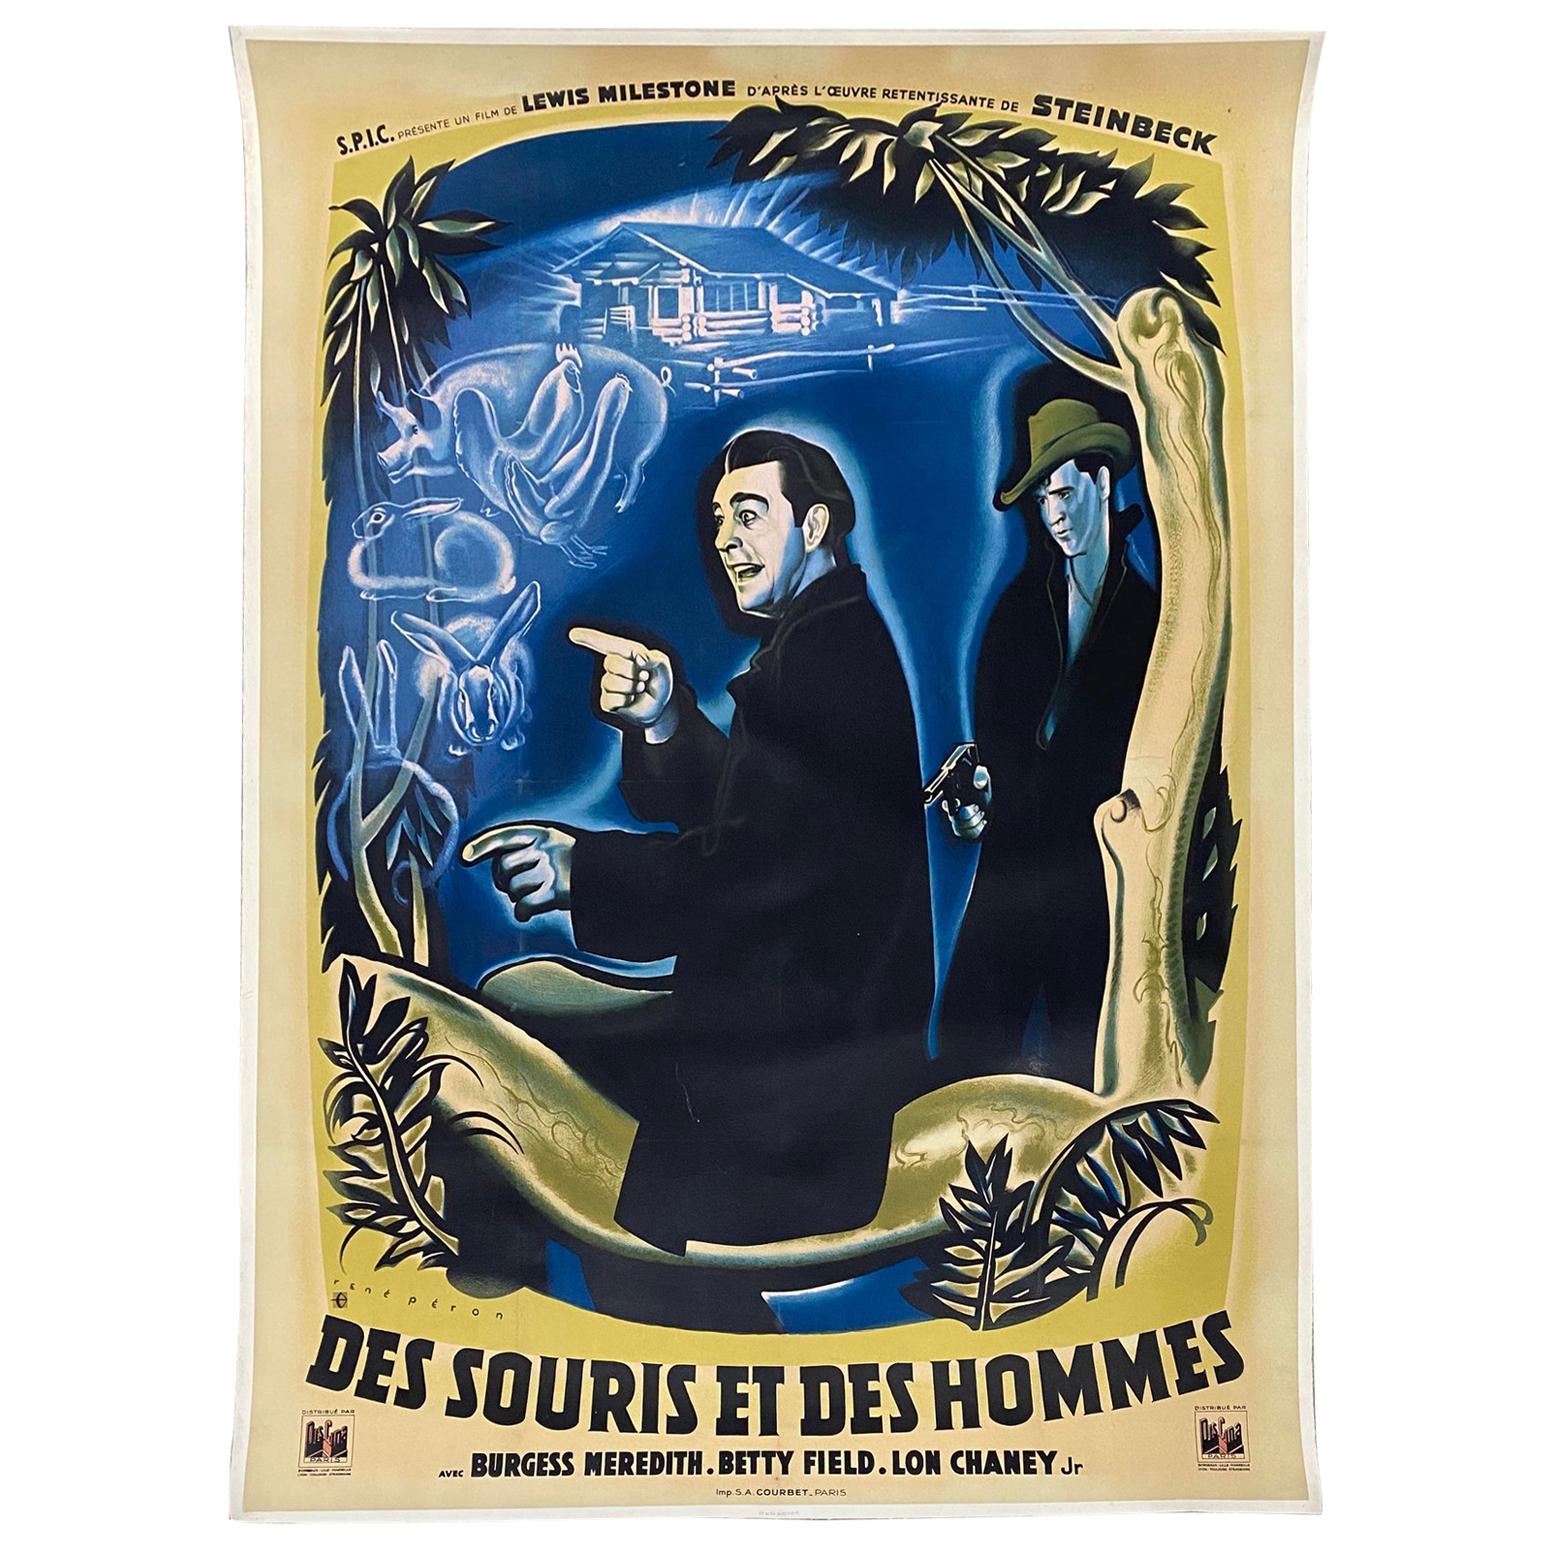 Des Souris Et Des Hommes "Of Mice & Men" Steinbeck, French Movie Poster